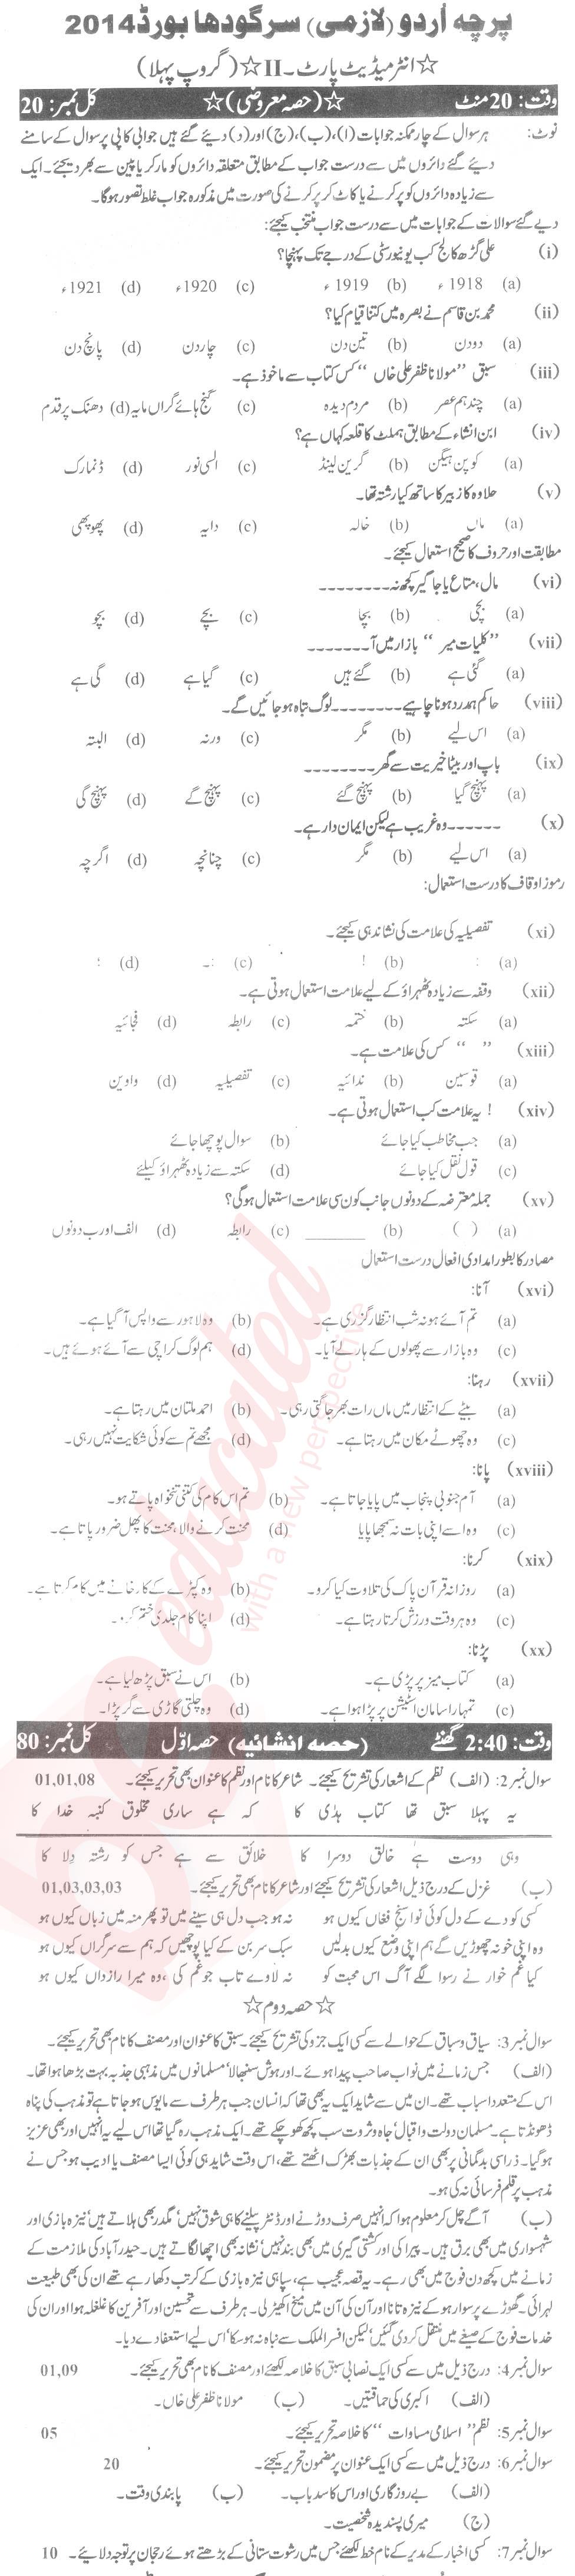 Urdu 12th class Past Paper Group 1 BISE Sargodha 2014